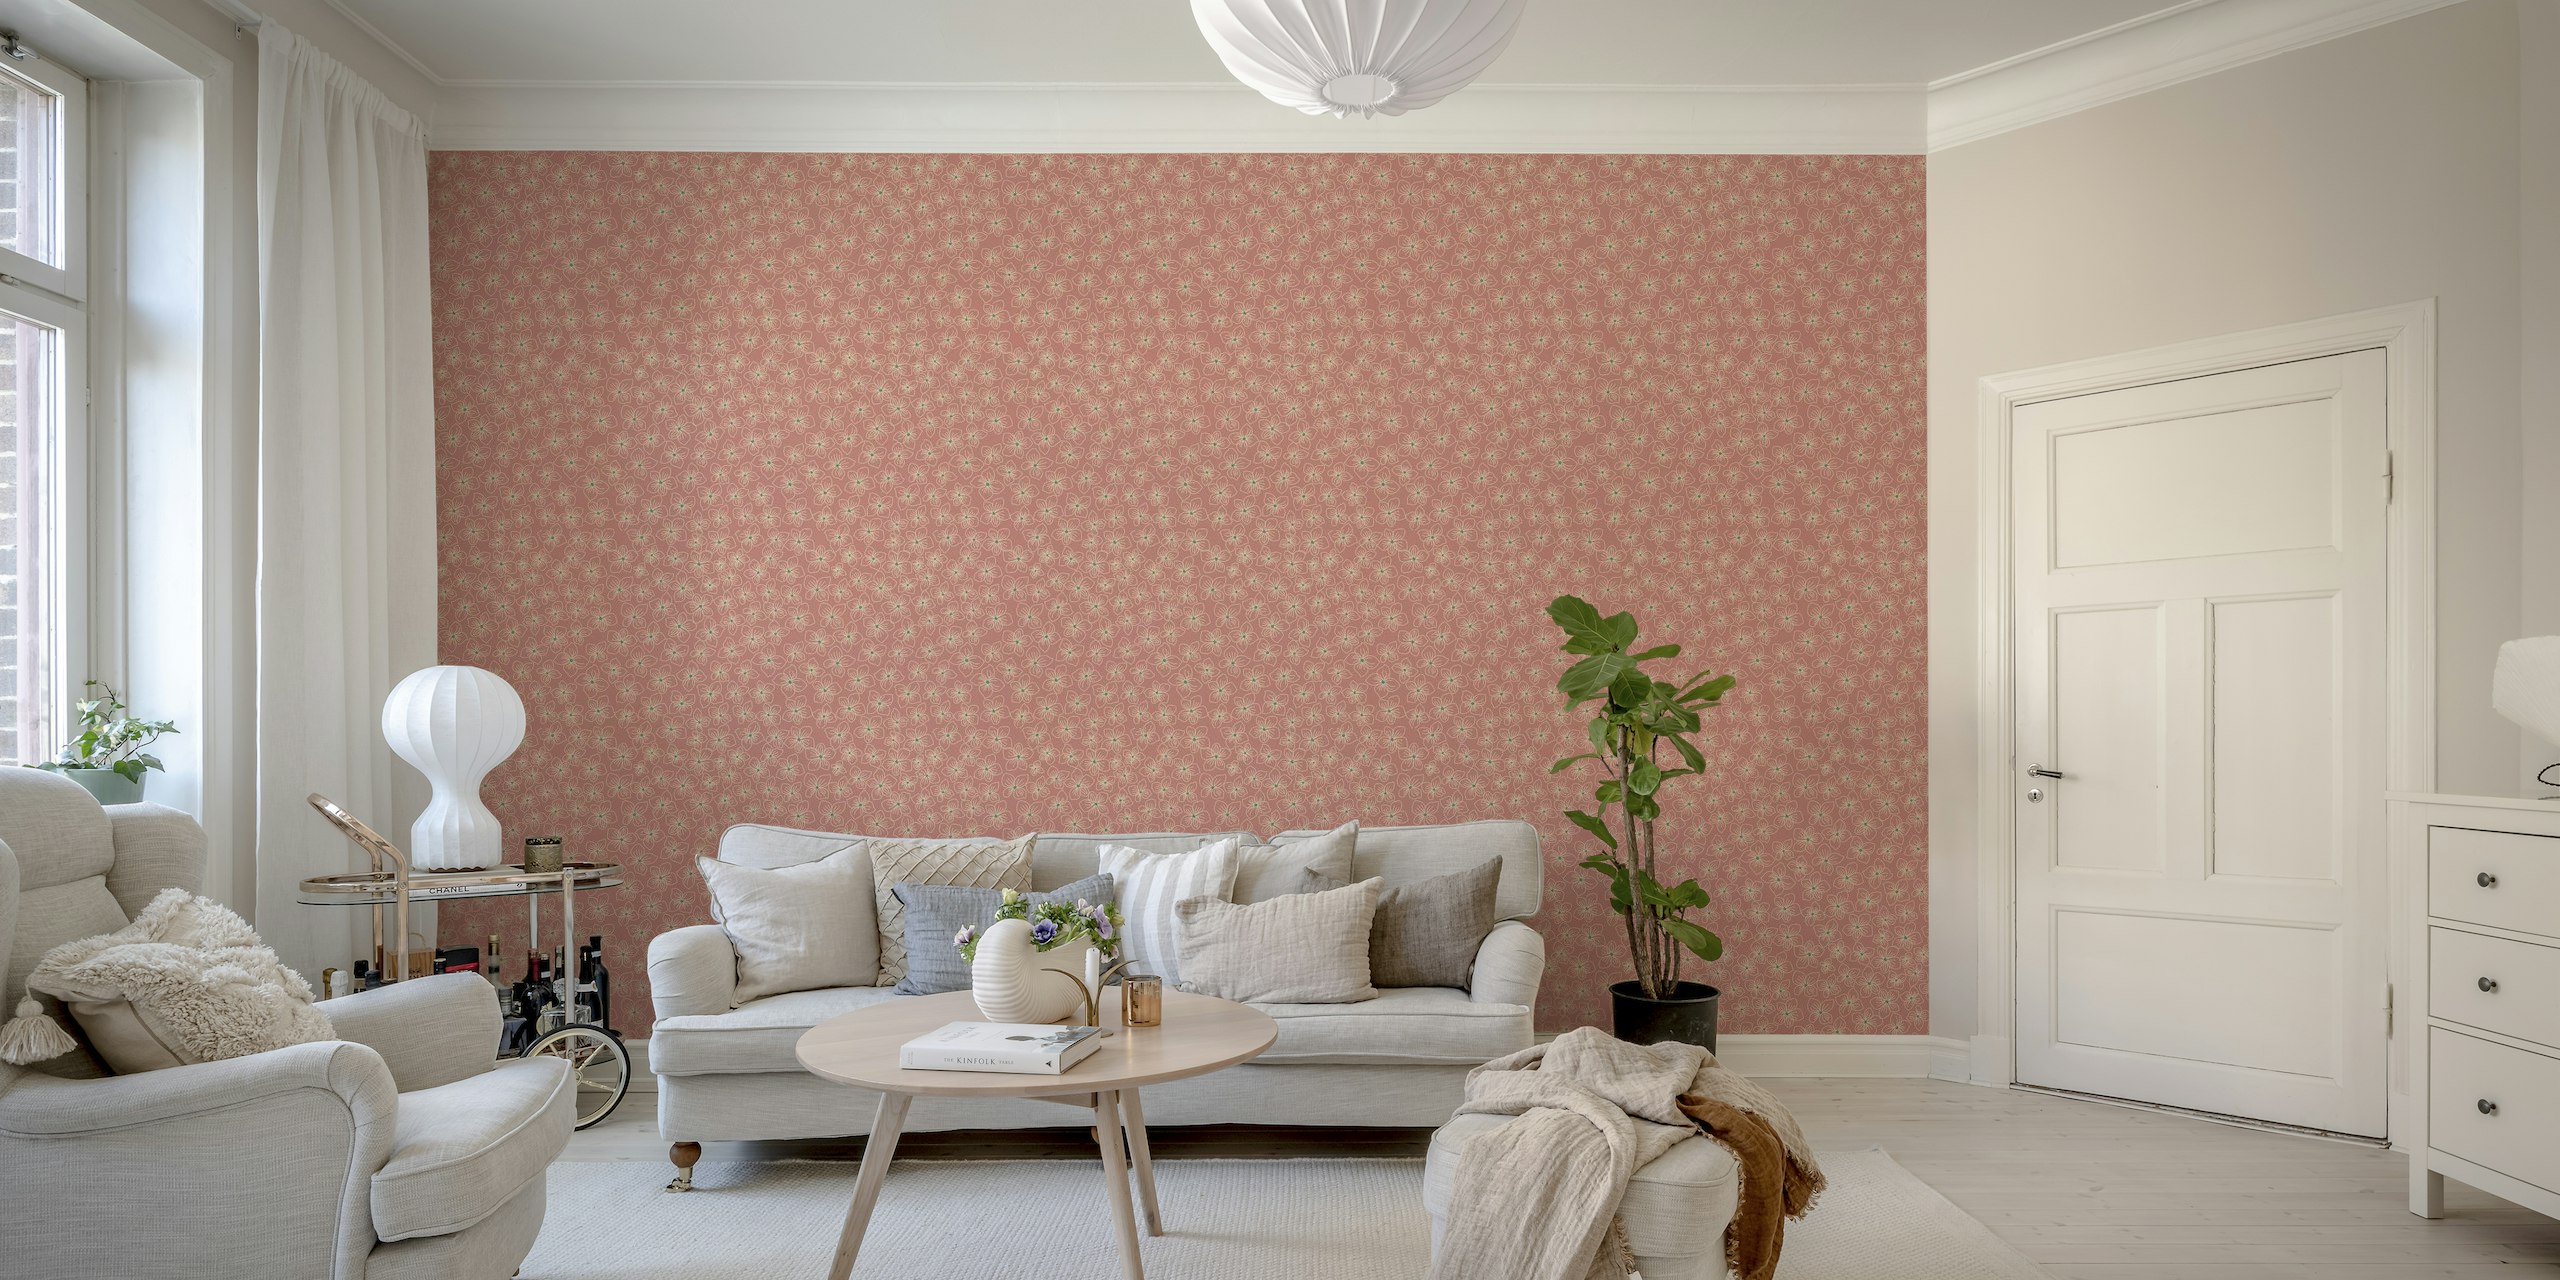 Blossoming wallpaper